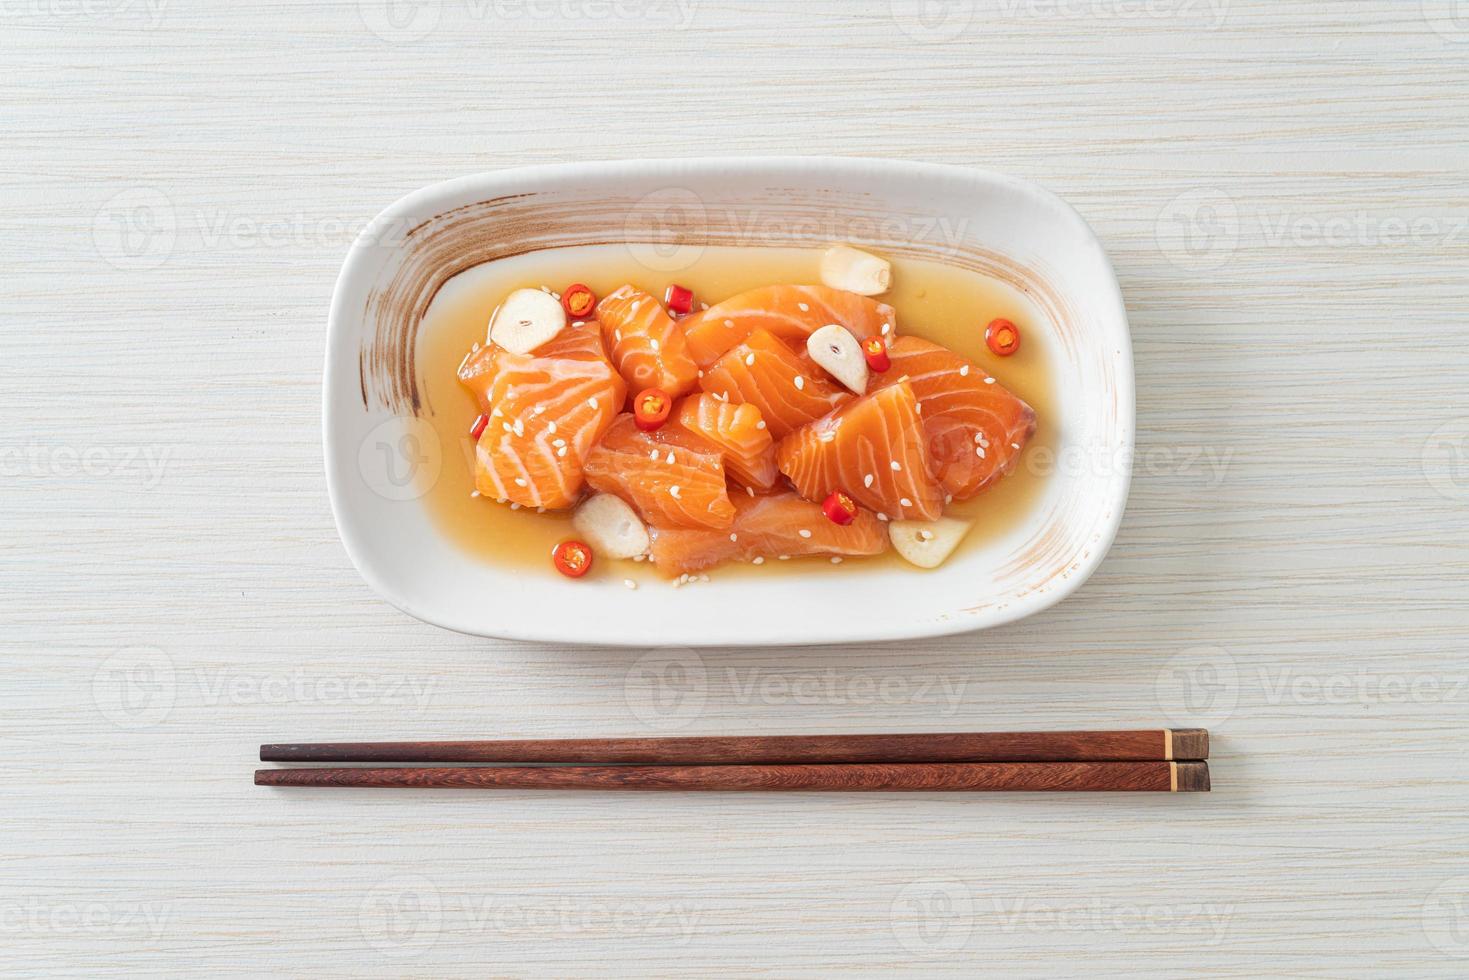 salmone fresco crudo marinato shoyu o salsa di soia marinata al salmone - stile asiatico foto